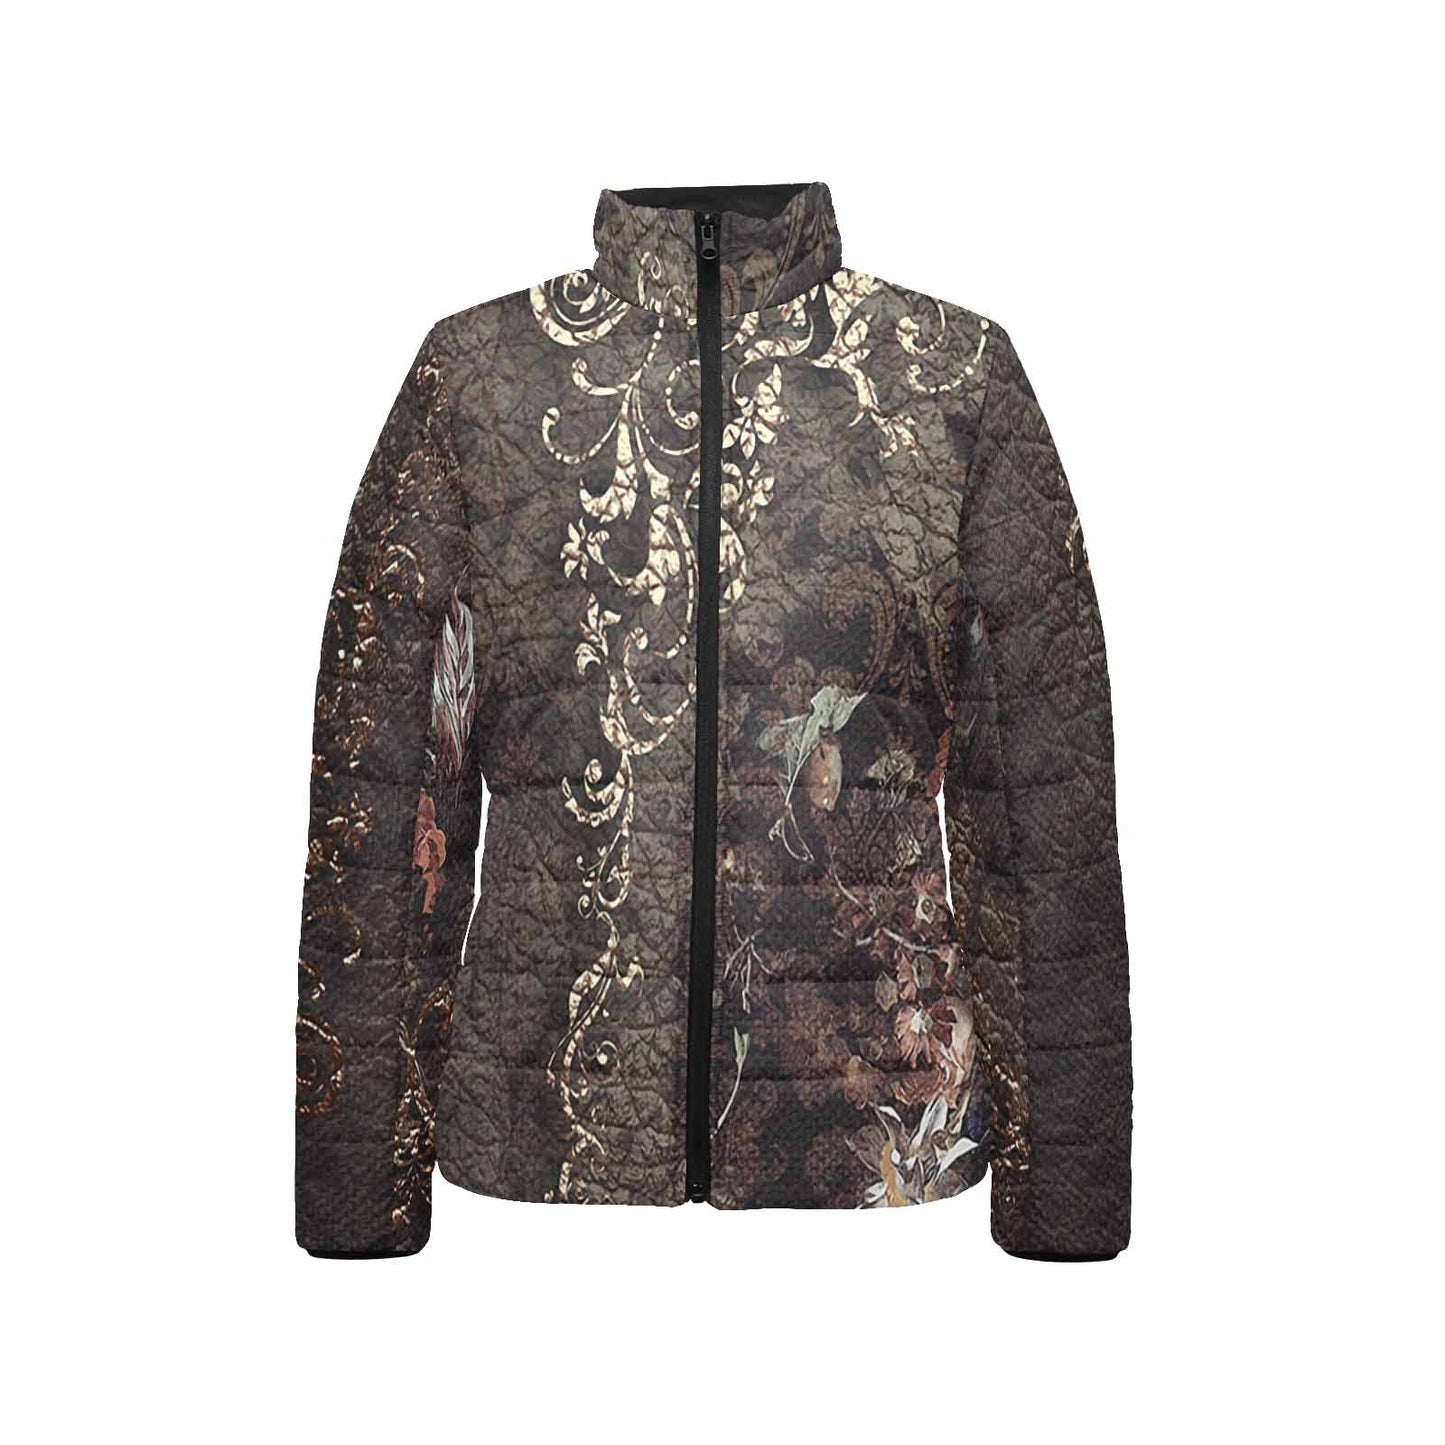 Antique general print quilted jacket, design 12